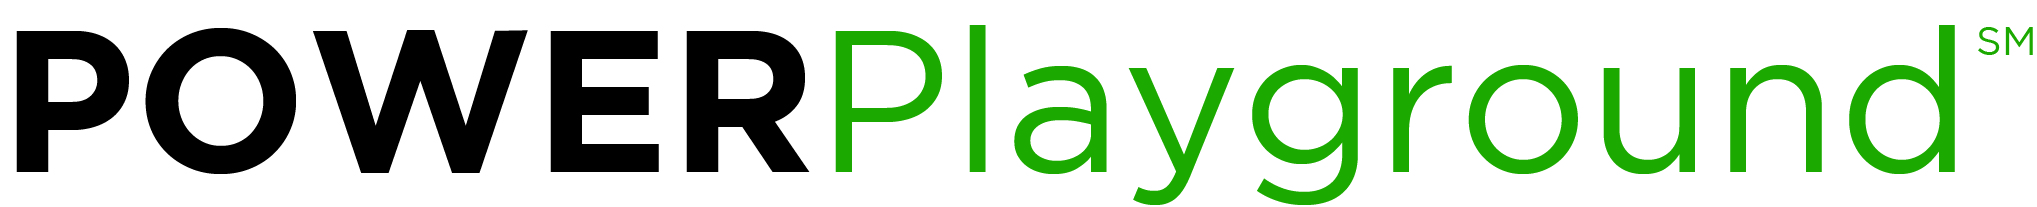 Power Plaground logo w SM jpg